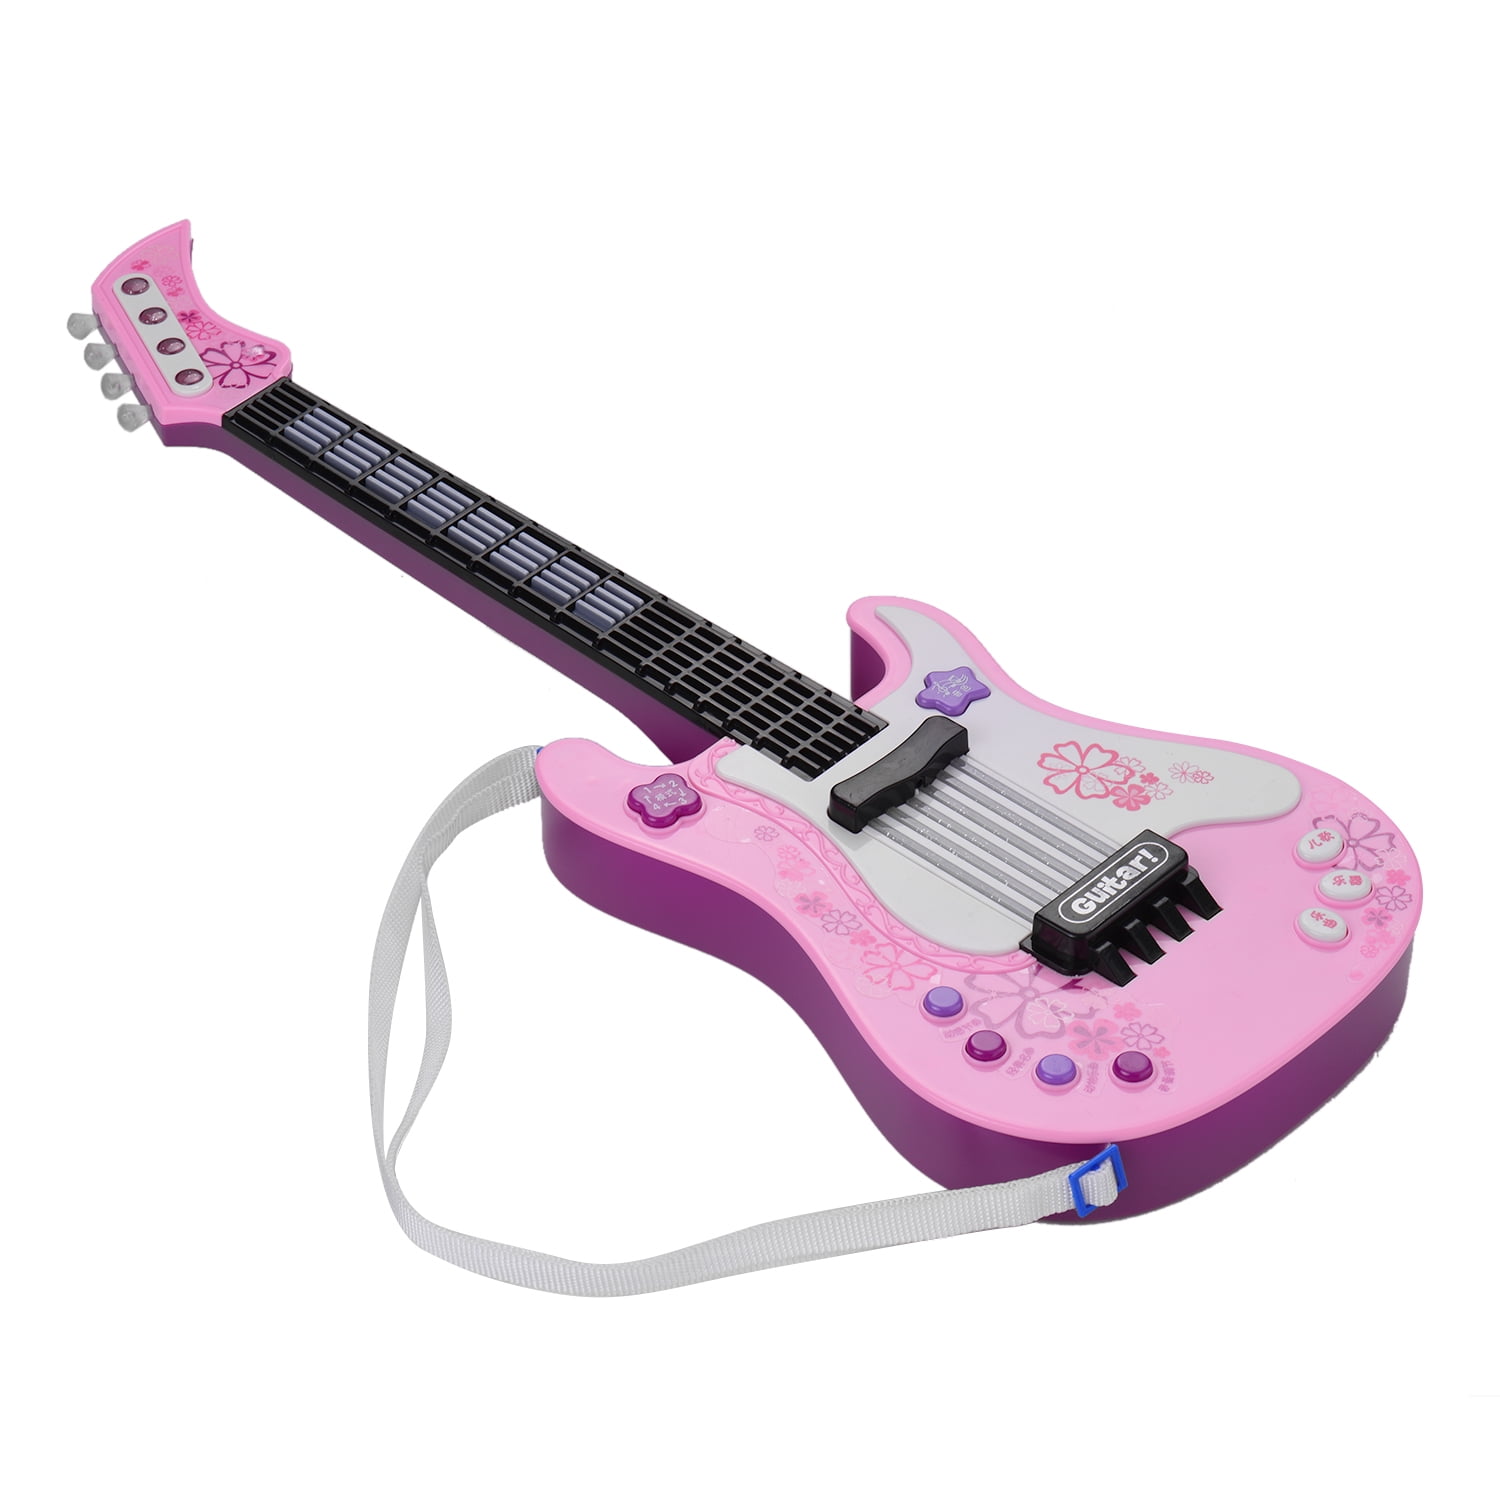 Best guitar for kids